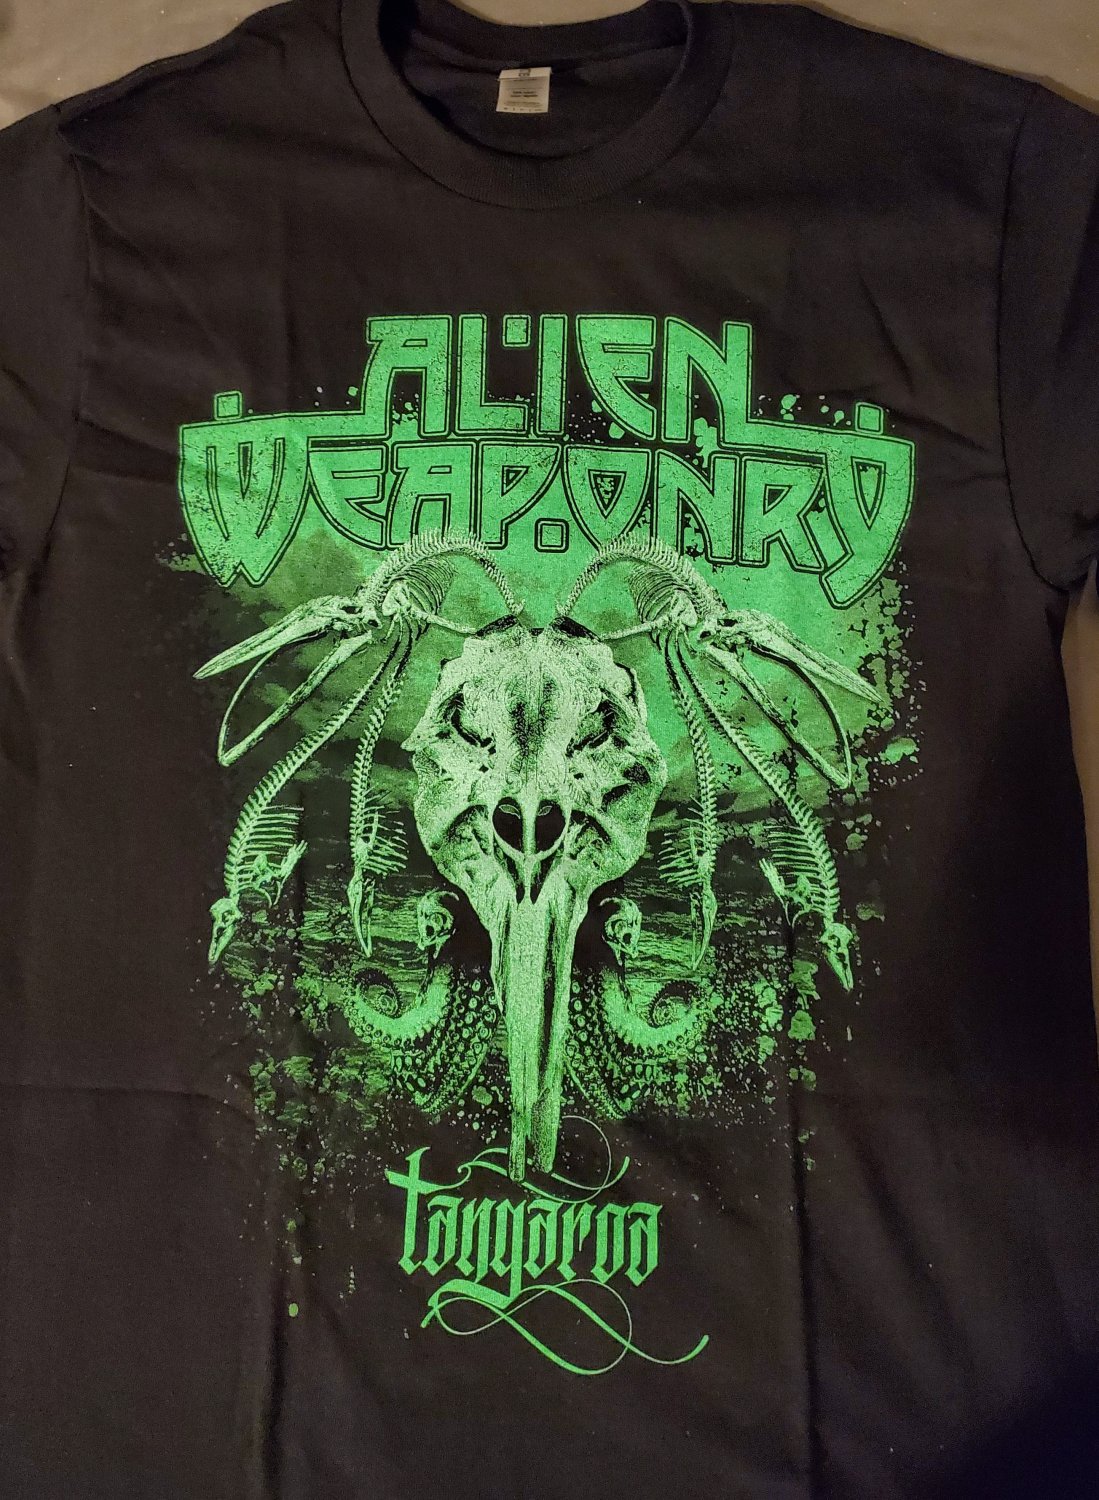 Alien weaponry t shirt tangaroa metal band tee sz small black